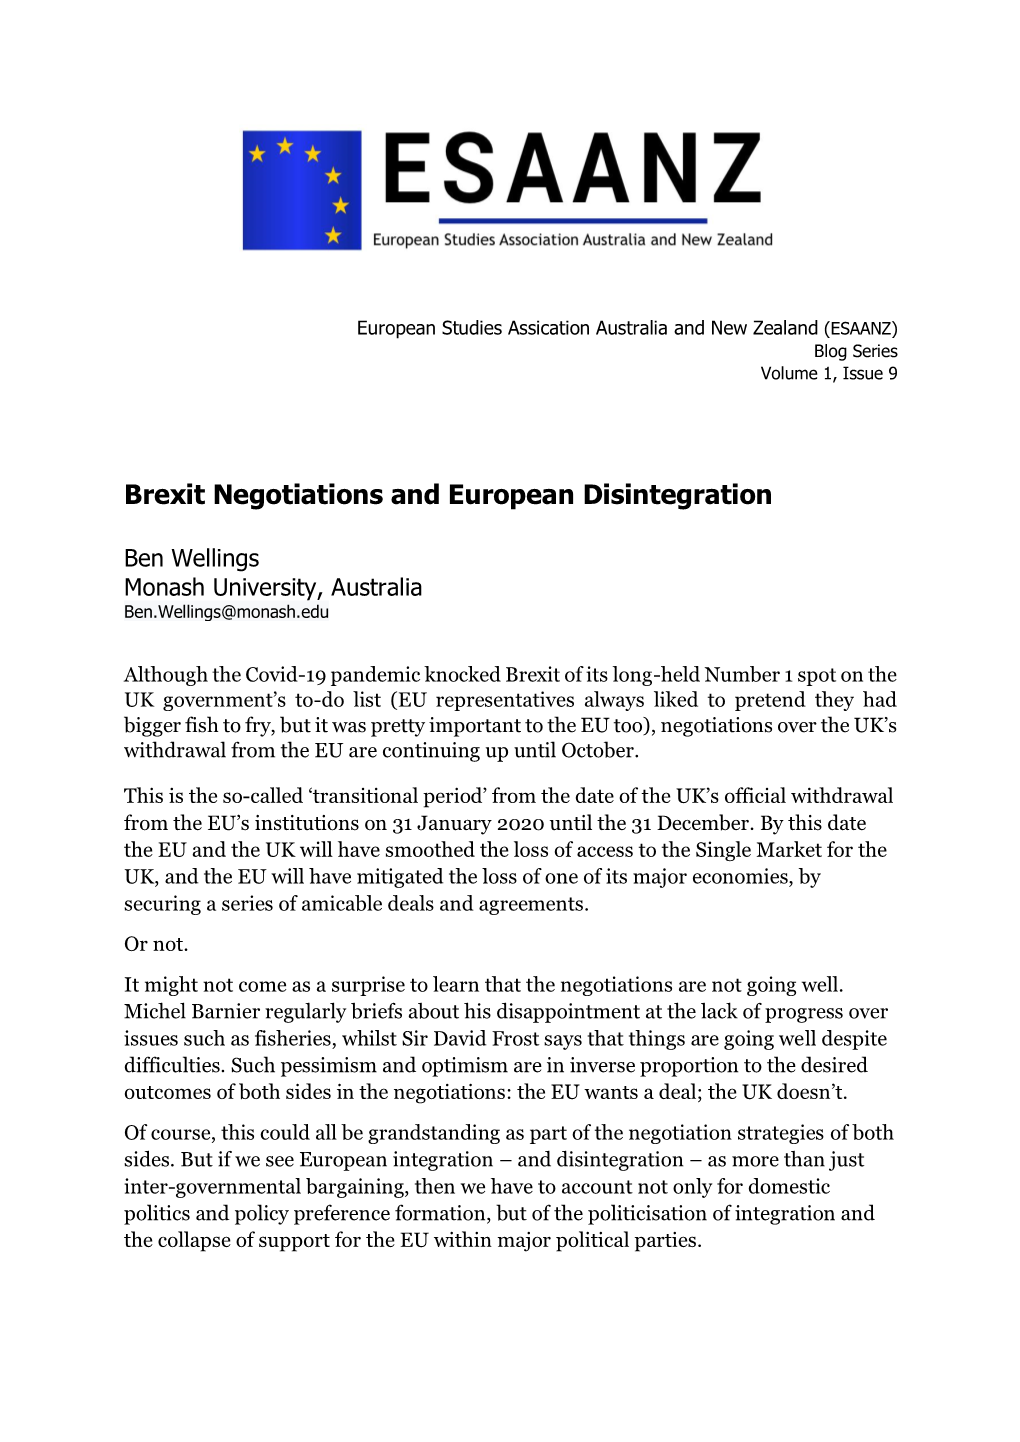 Brexit Negotiations and European Disintegration